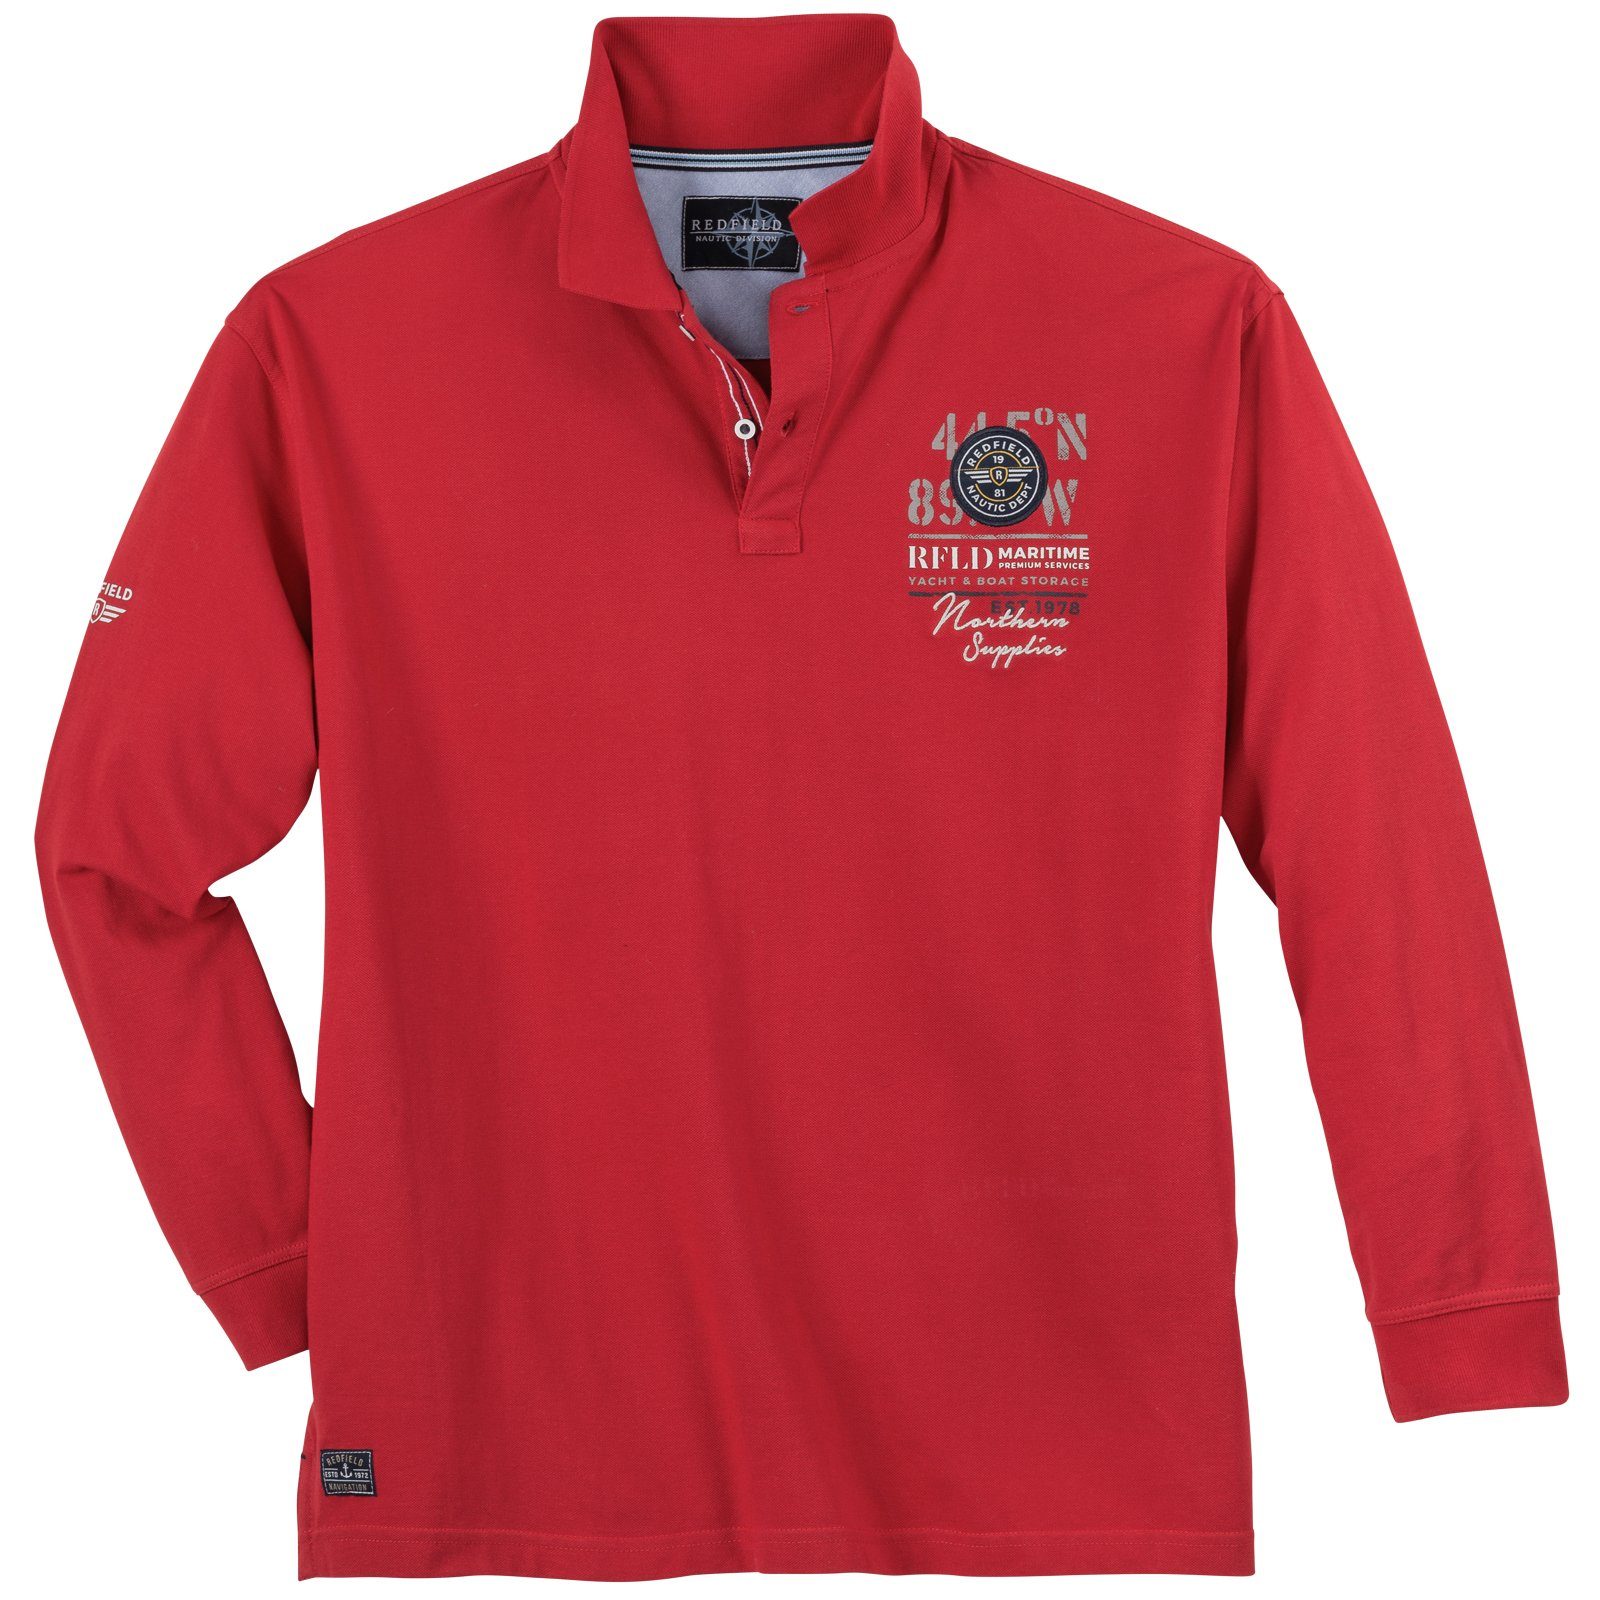 Langarm-Poloshirt Größen Große Redfield rot redfield Herren maritim Langarm-Poloshirt